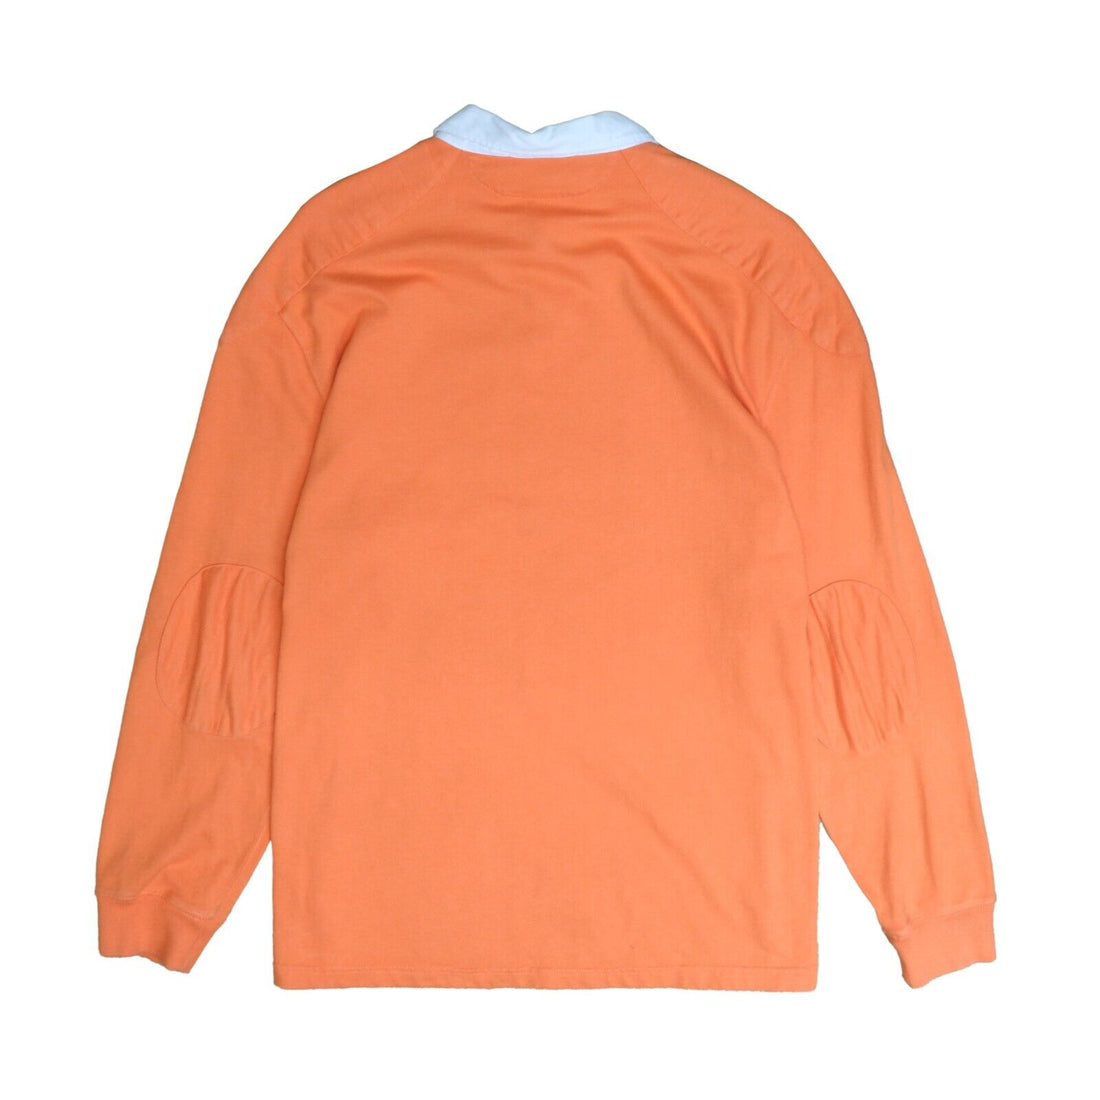 Vintage Polo Ralph Lauren Five Horsemen Rugby Shirt Large Long Sleeve Orange